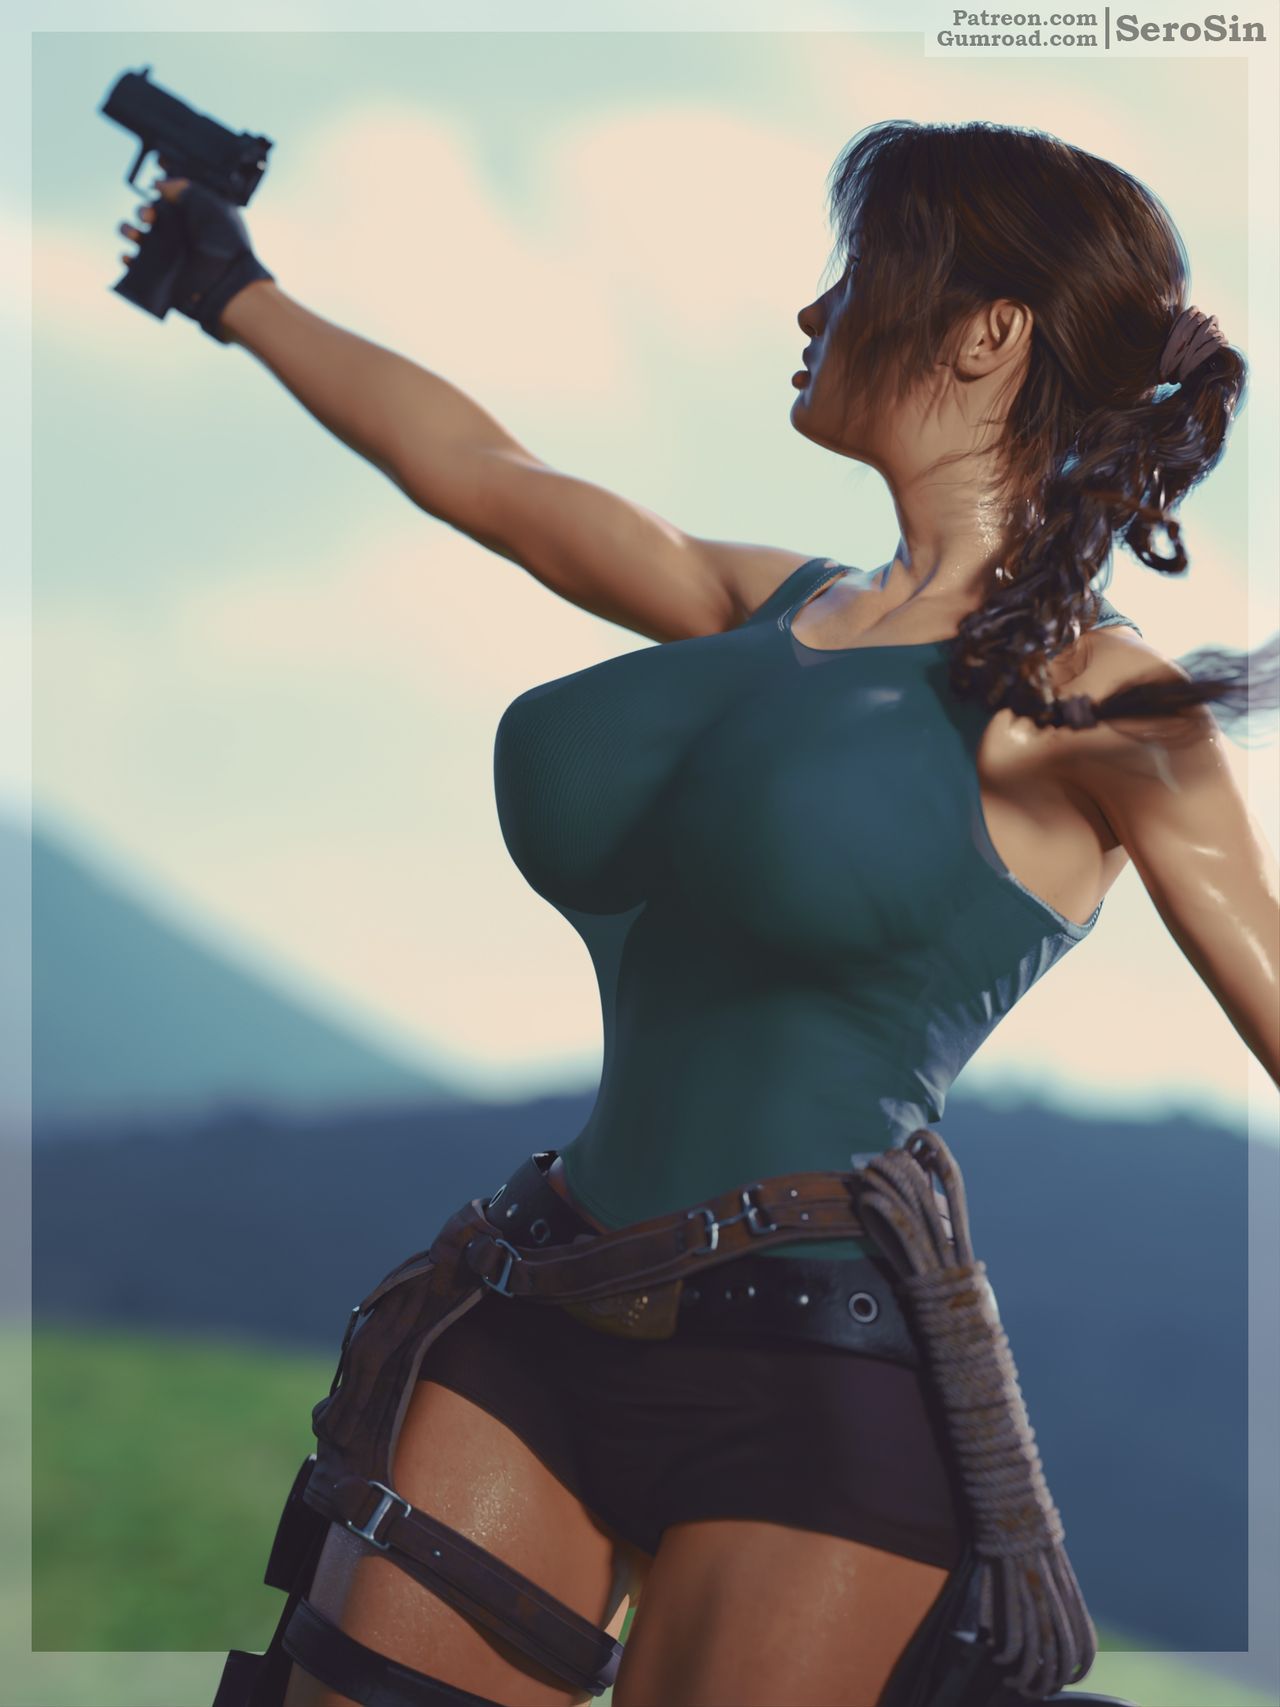 [SeroSin] Lara Croft: Captured 3